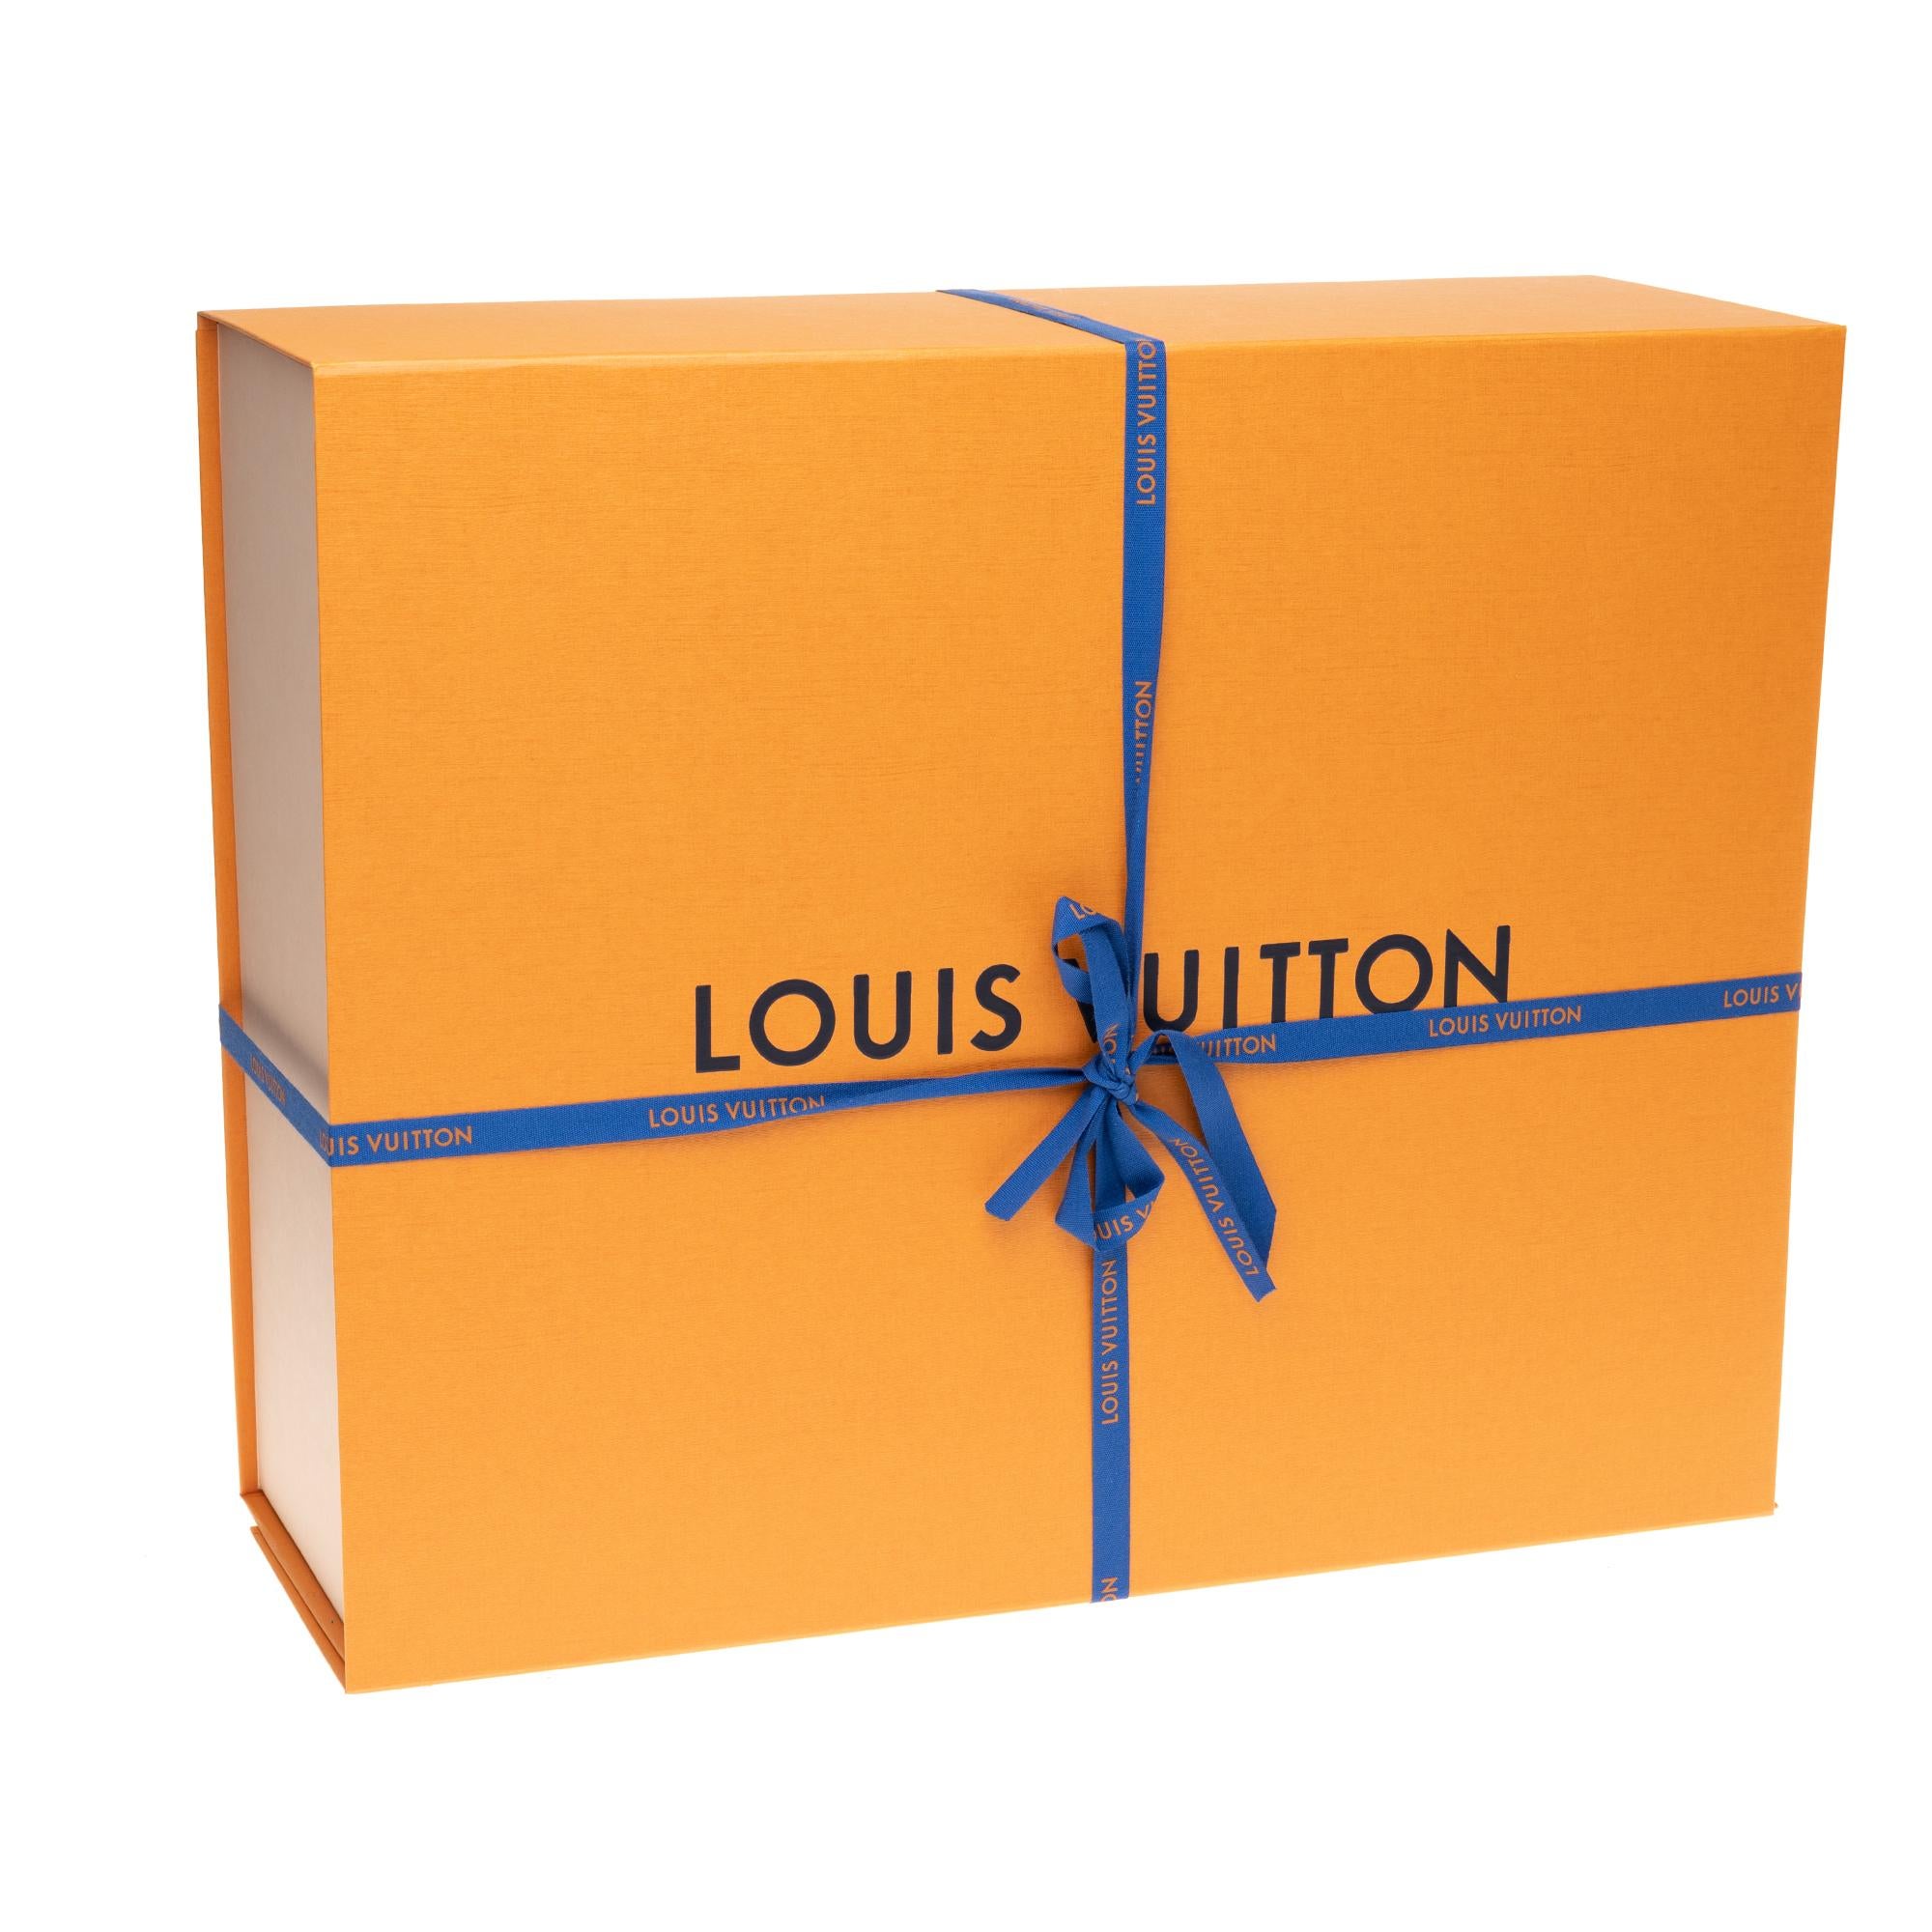 BRAND NEW Limited Edition Louis Vuitton Onthego Teddy Fleece handbag 6